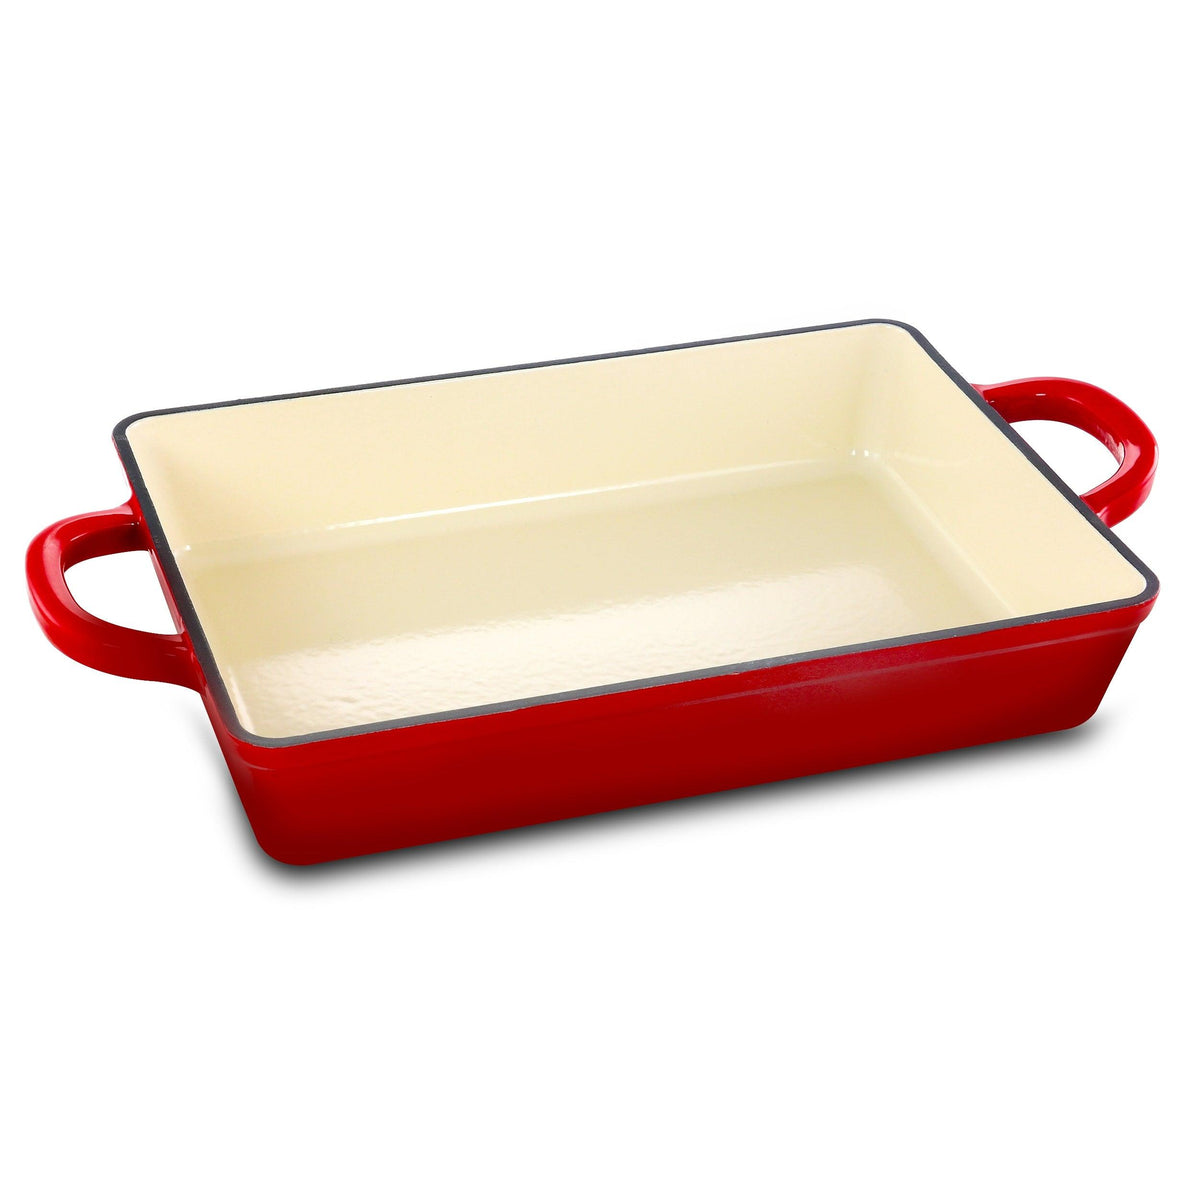 Crock Pot Artisan 13 in. Enameled Cast Iron Lasagna Pan in Scarlet Red FSSA Global B